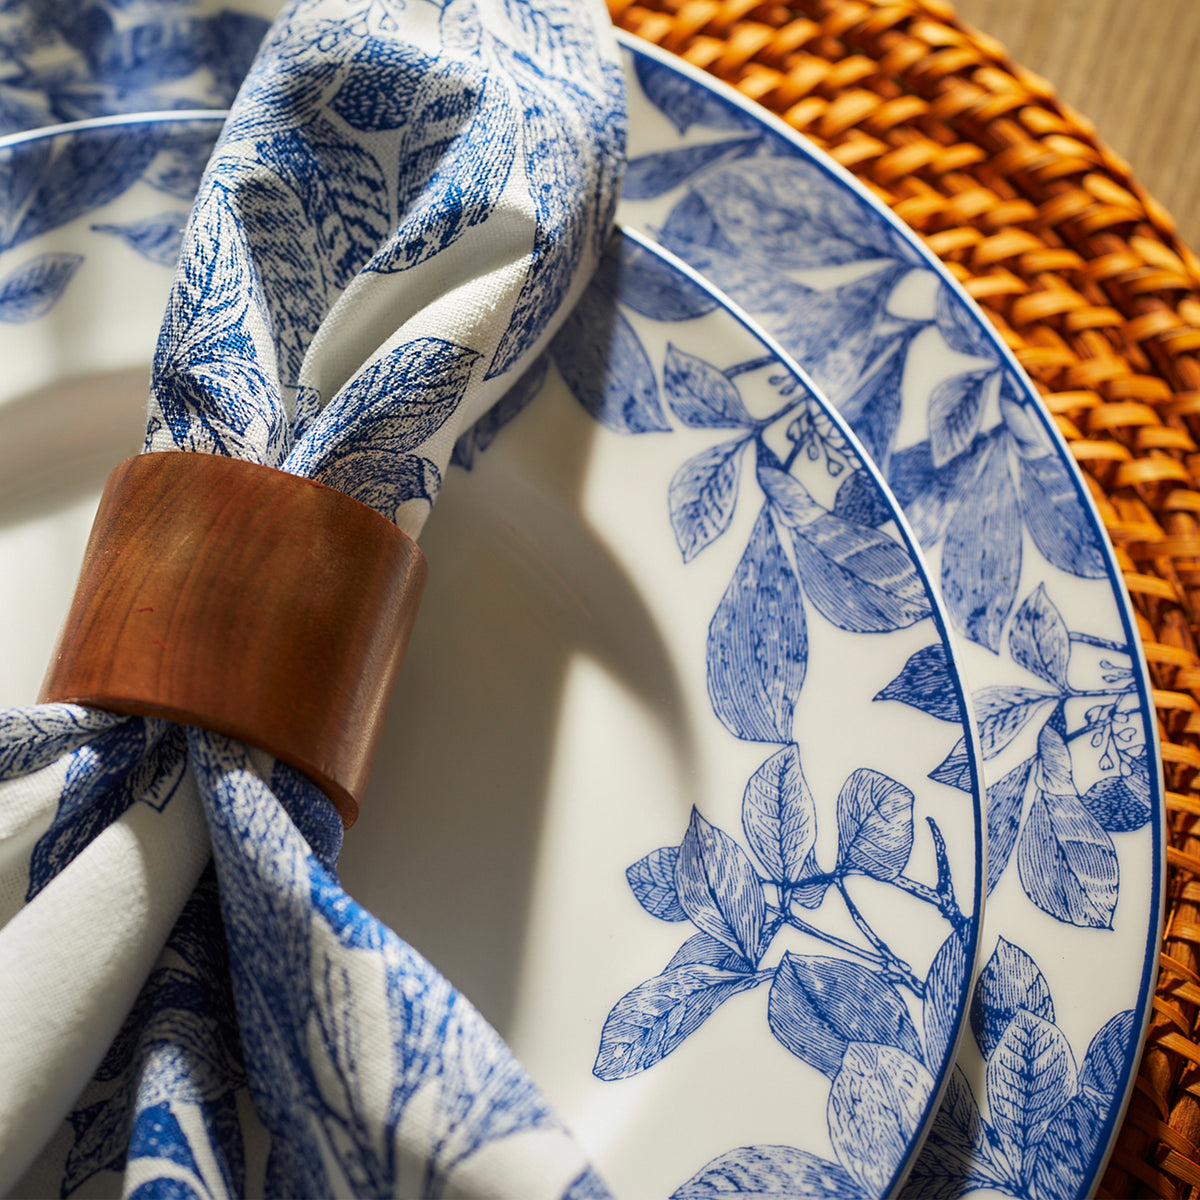 A Caskata Artisanal Home Arbor BlueSoup dinnerware plate with a napkin on it.